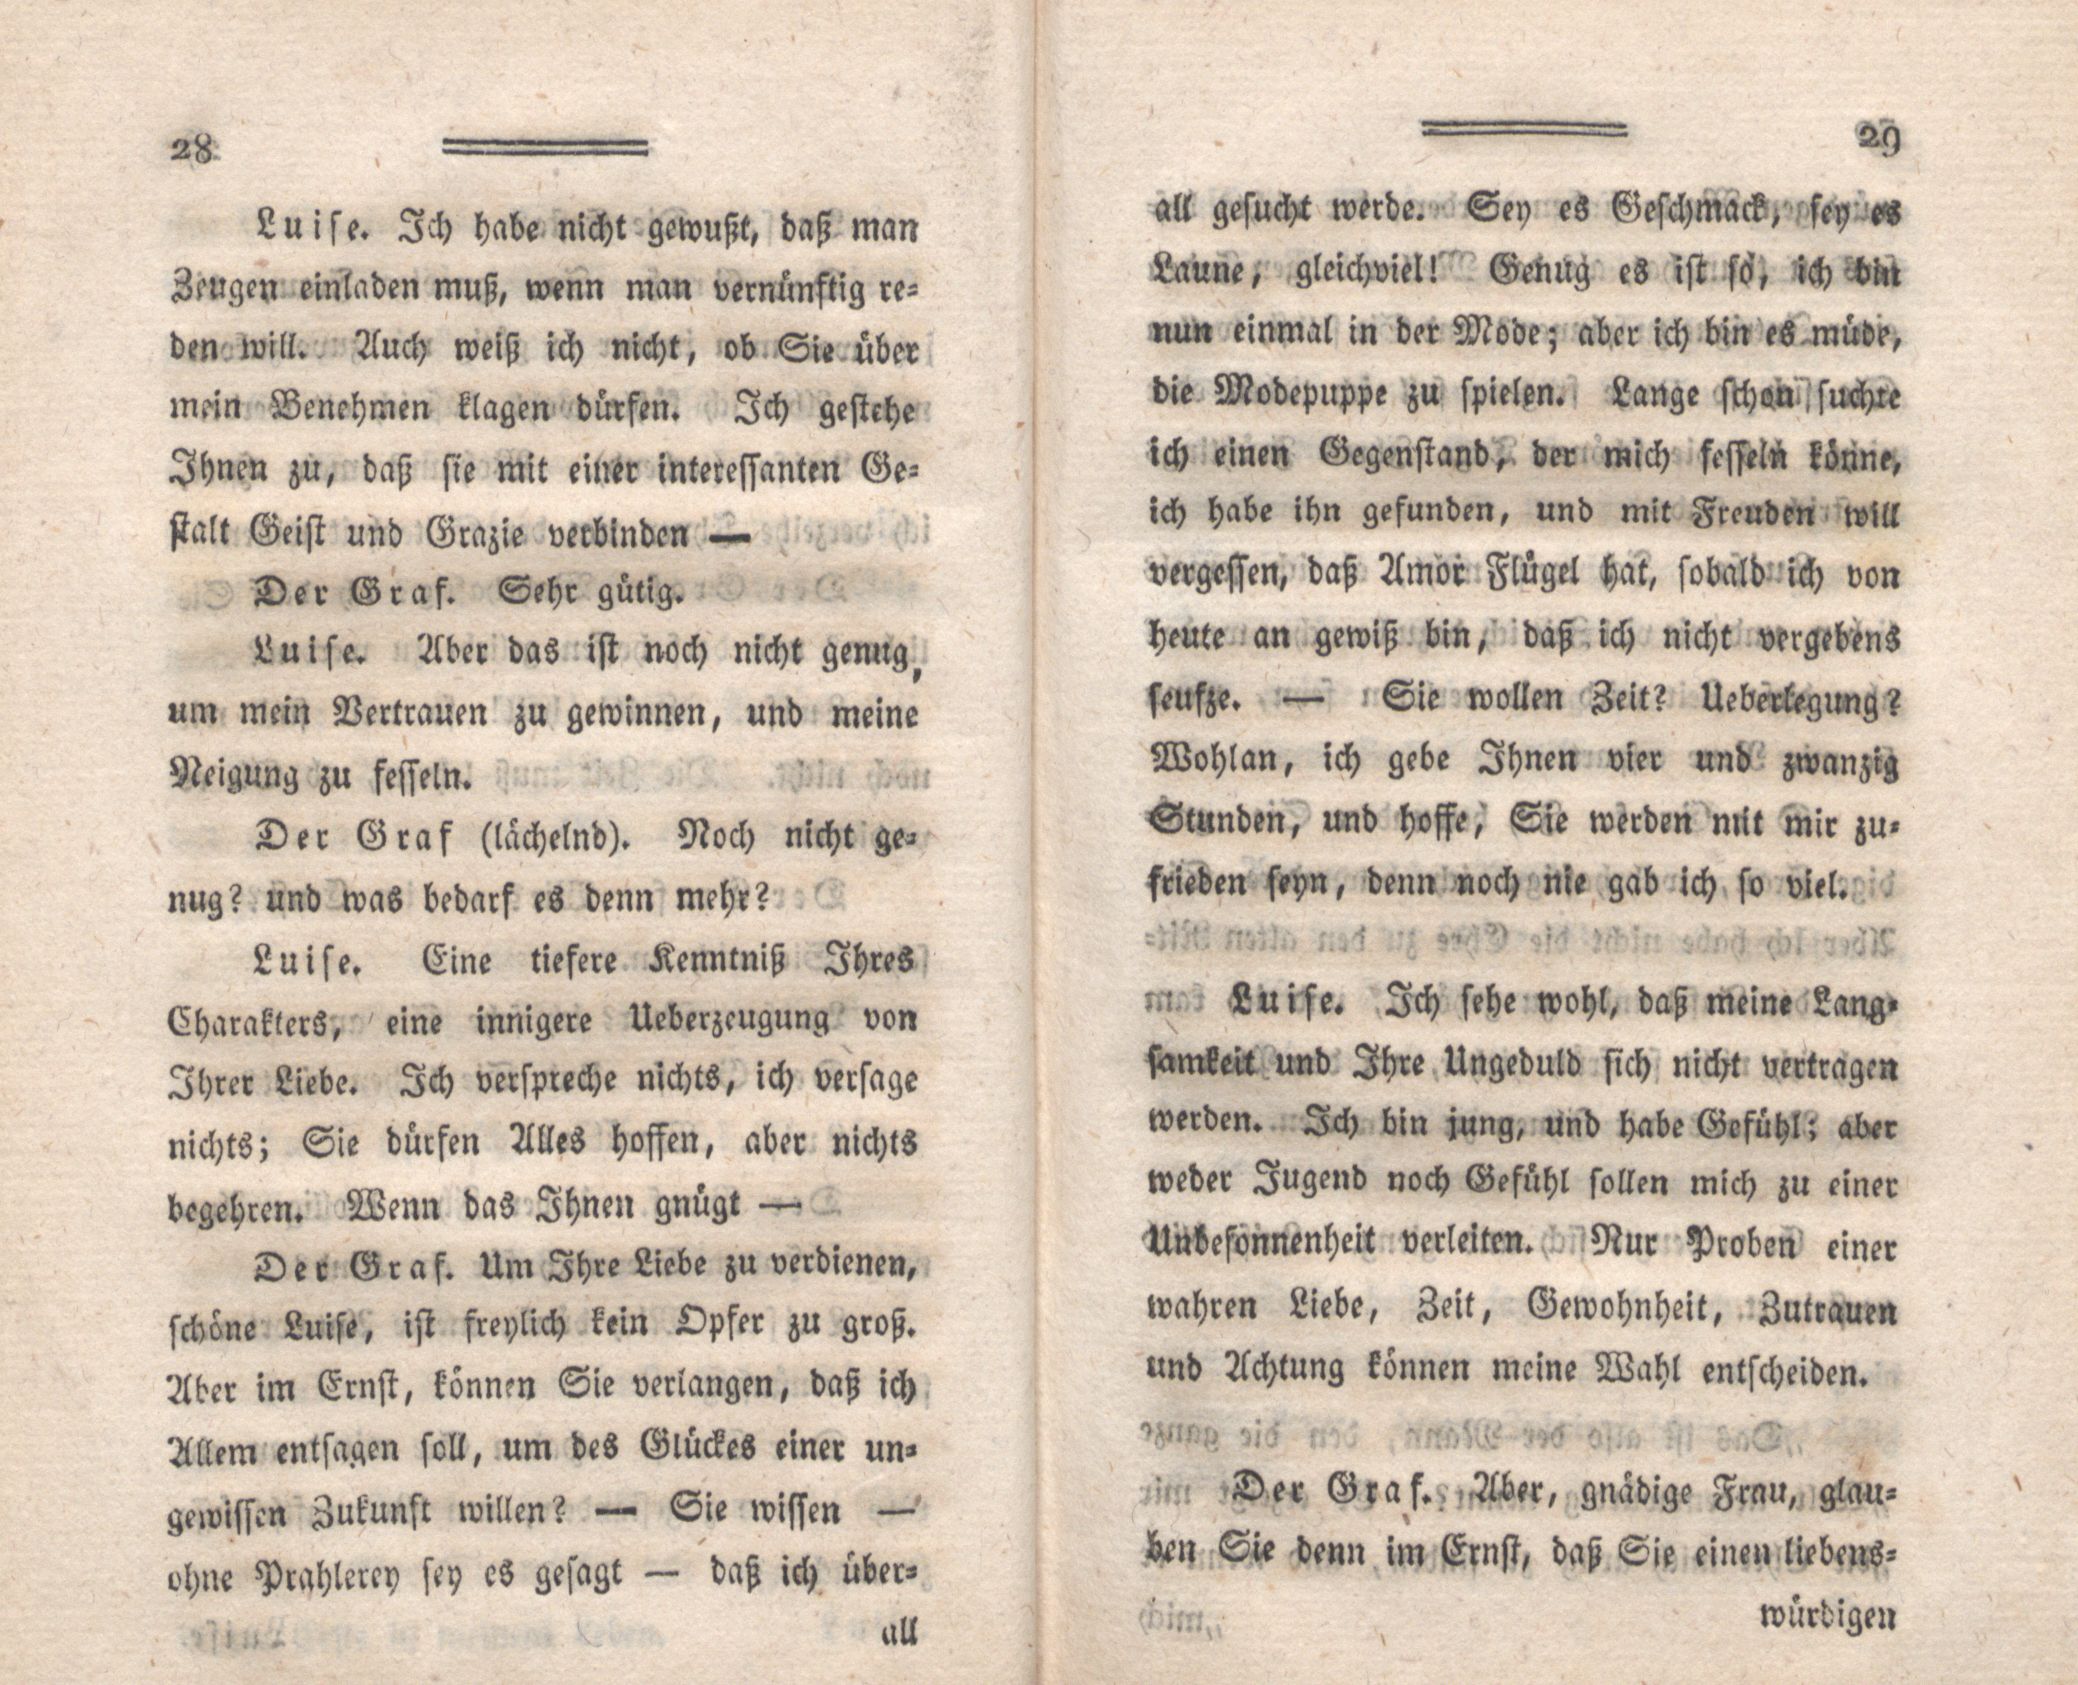 Die jüngsten Kinder meiner Laune [2] (1794) | 20. (28-29) Основной текст